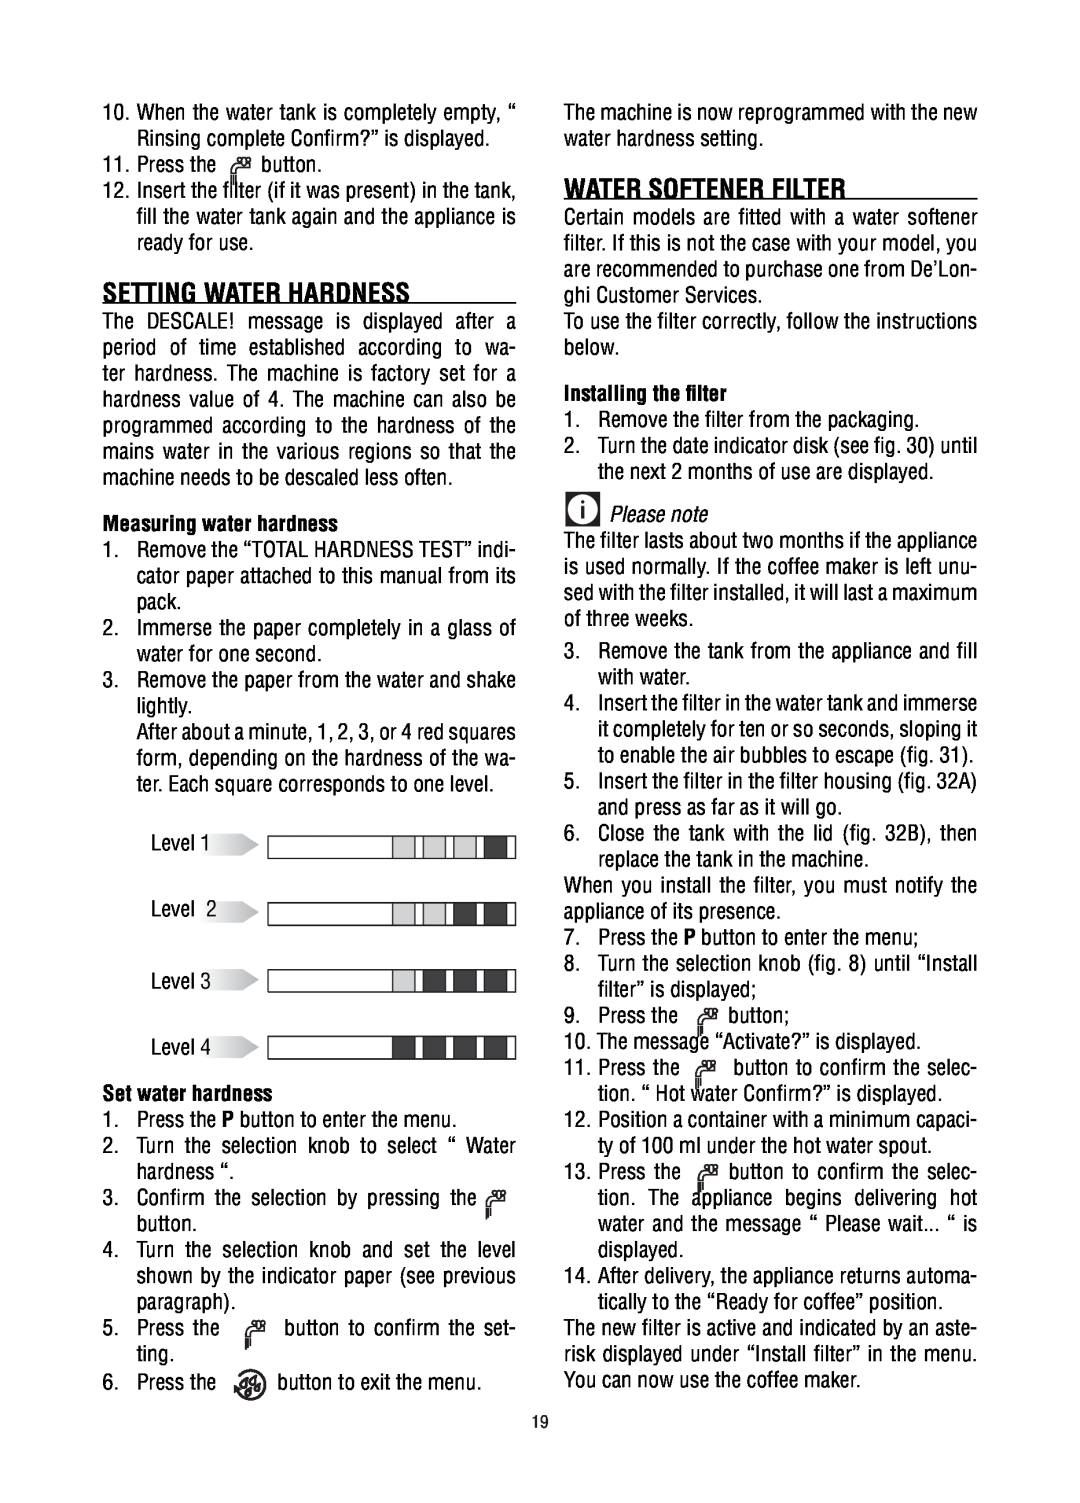 DeLonghi ECAM23.450 manual Setting Water Hardness, Water Softener Filter, Measuring water hardness, Set water hardness 